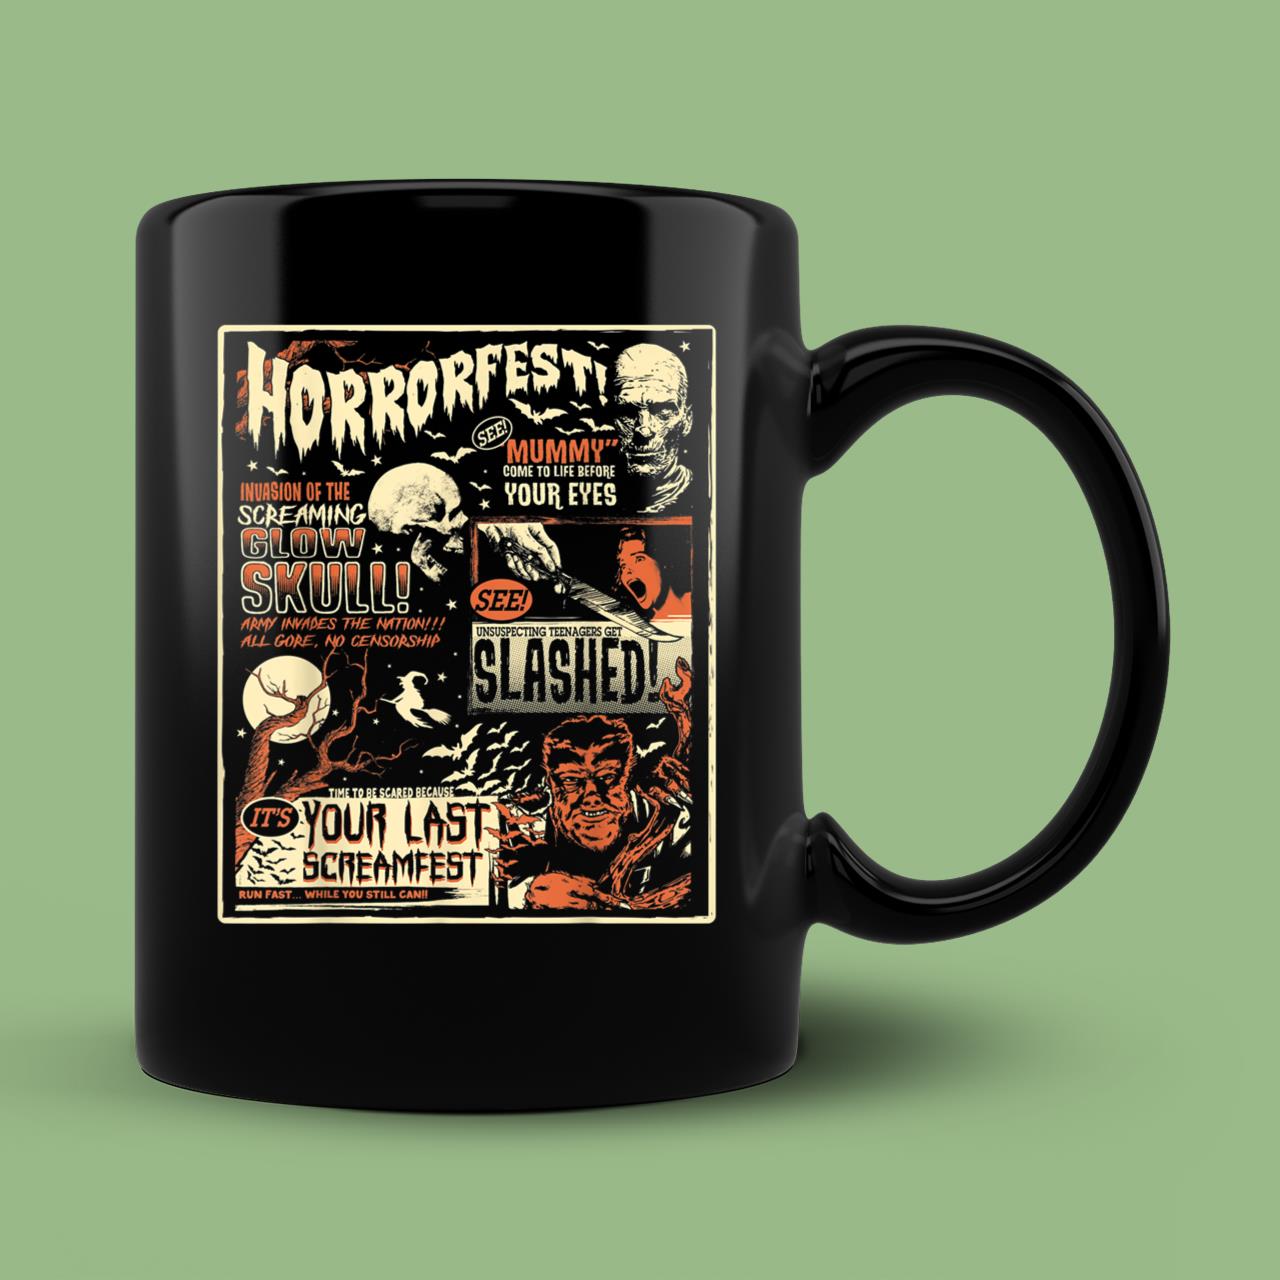 Skitongift Ceramic Novelty Coffee Mug Vintage Horrorfest Movie Poste Spooky Halloween Mug